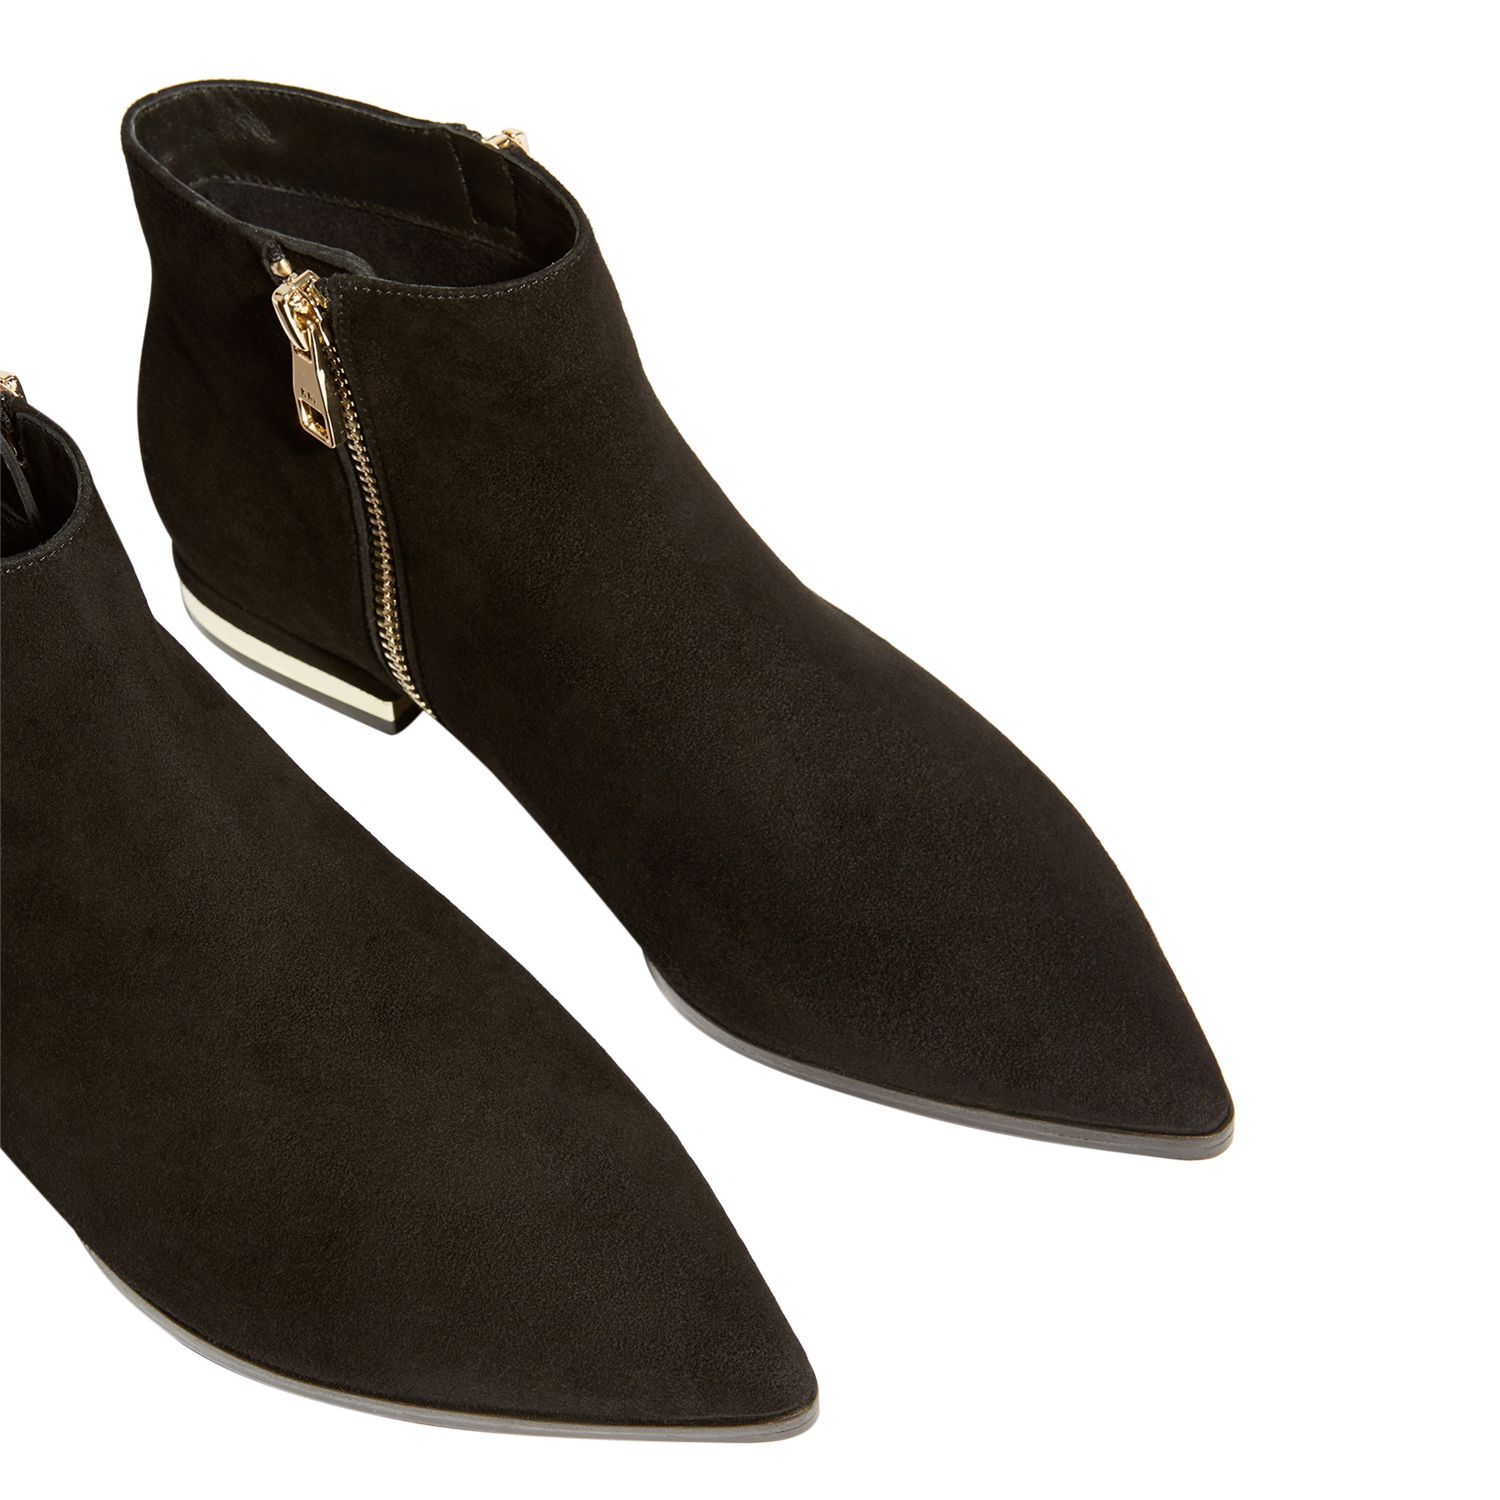 Karen Millen Side Zip Flat Ankle Boots Black Suede At John Lewis Partners